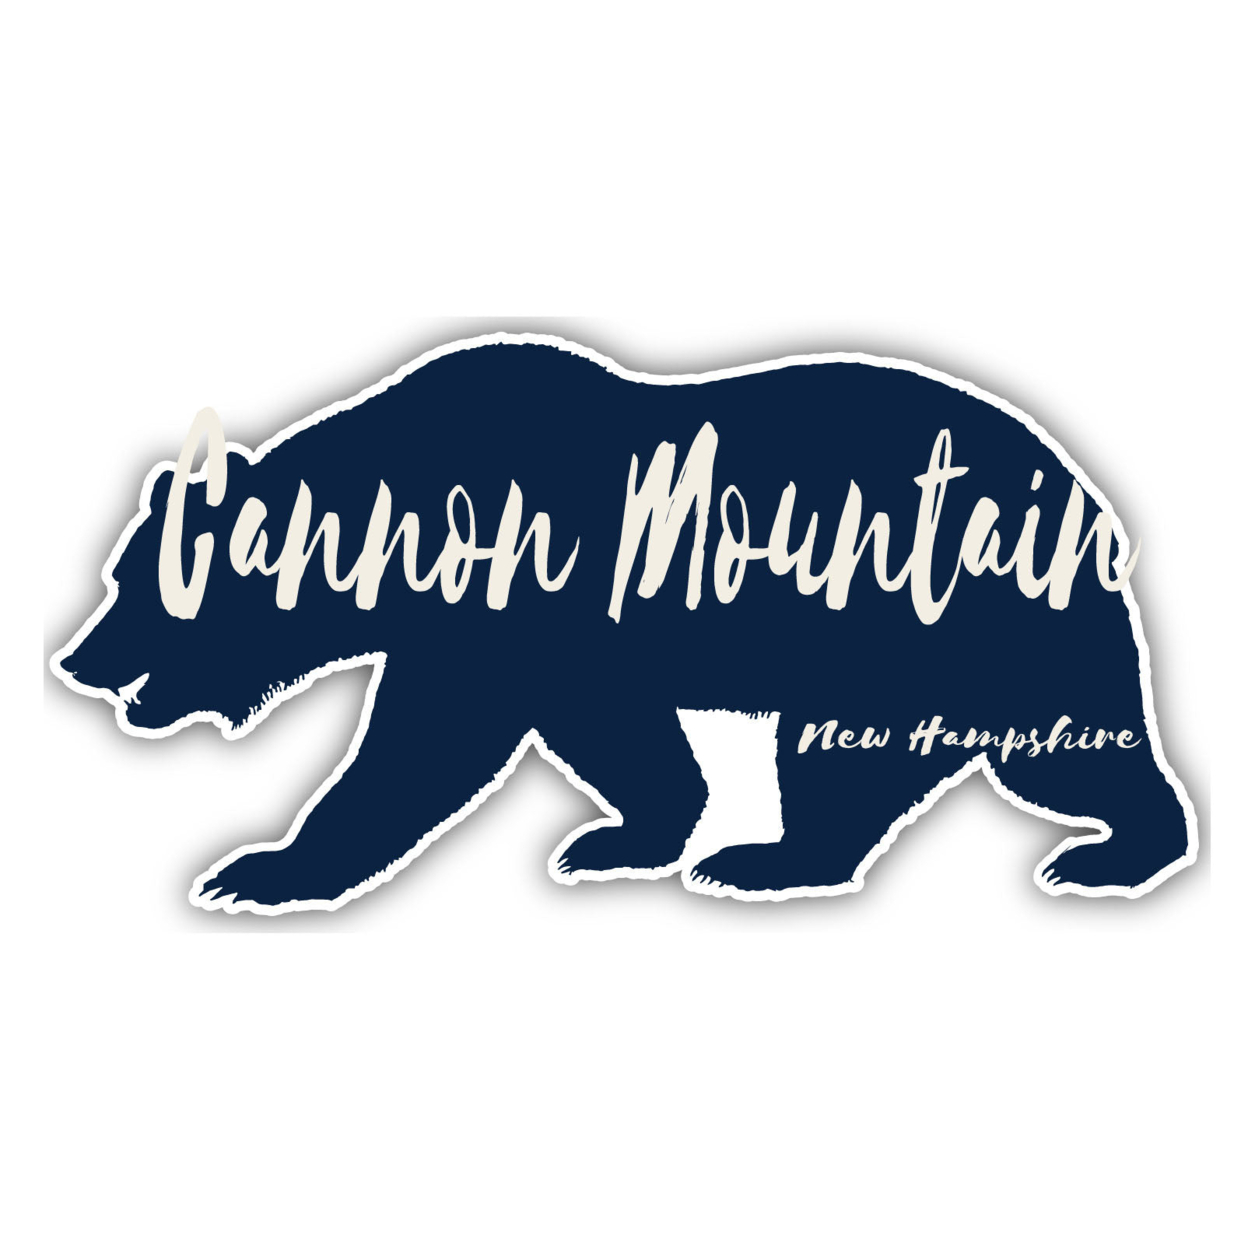 Cannon Mountain New Hampshire Souvenir Decorative Stickers (Choose Theme And Size) - Single Unit, 10-Inch, Bear